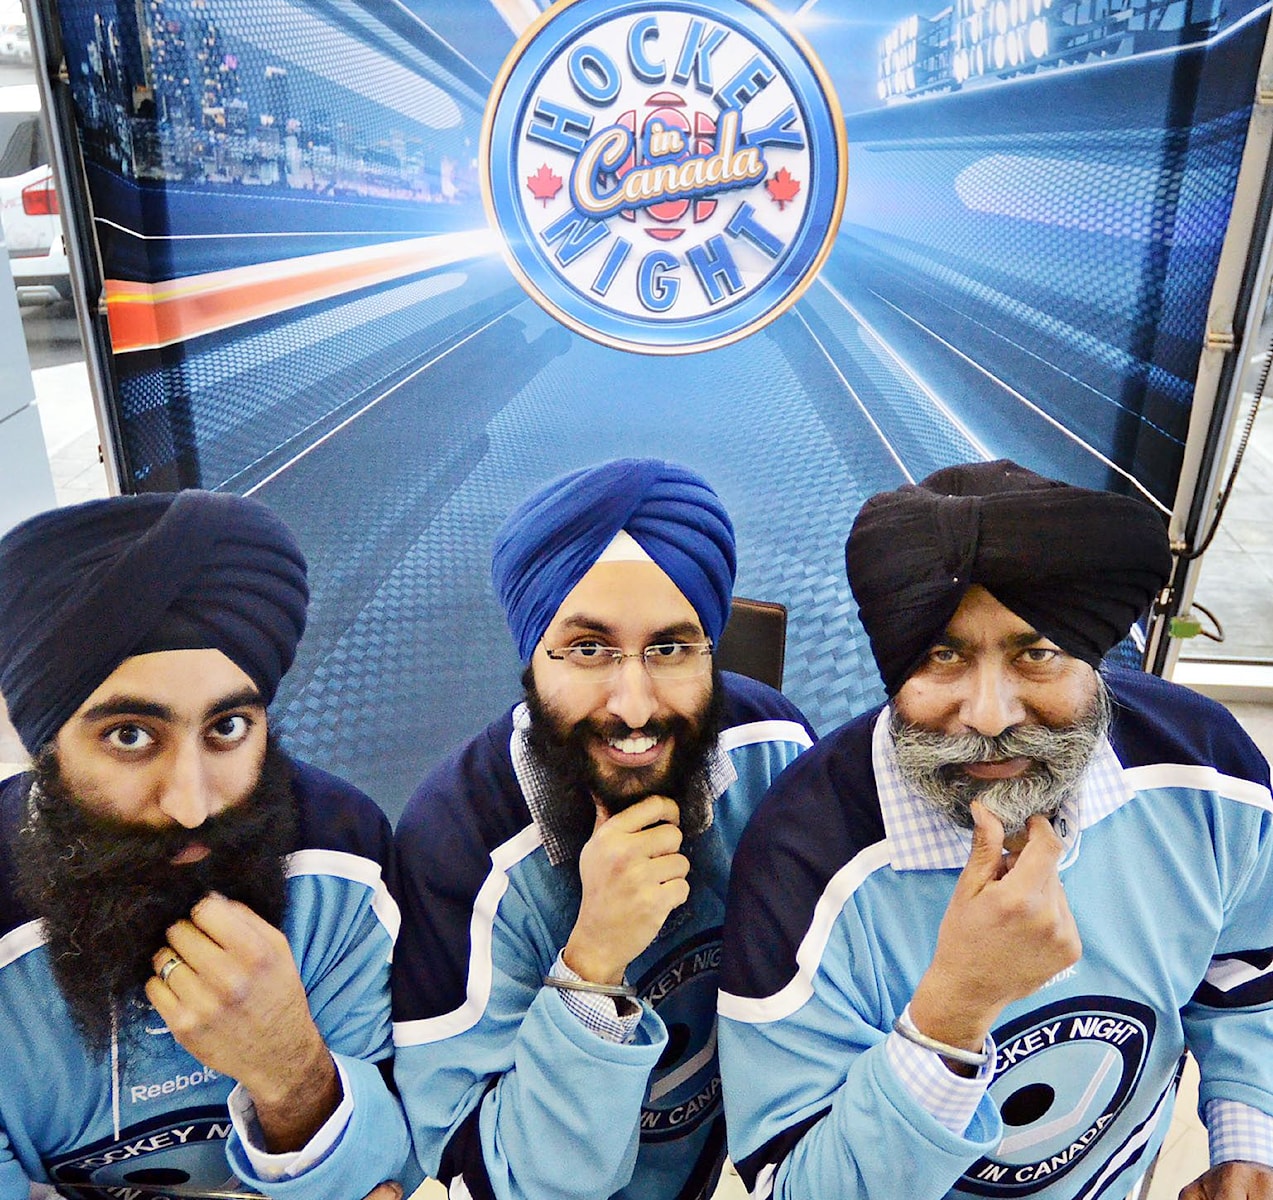 LOL at Multiculturalism: Reactions to Hockey Night Punjabi - Engaging Sports